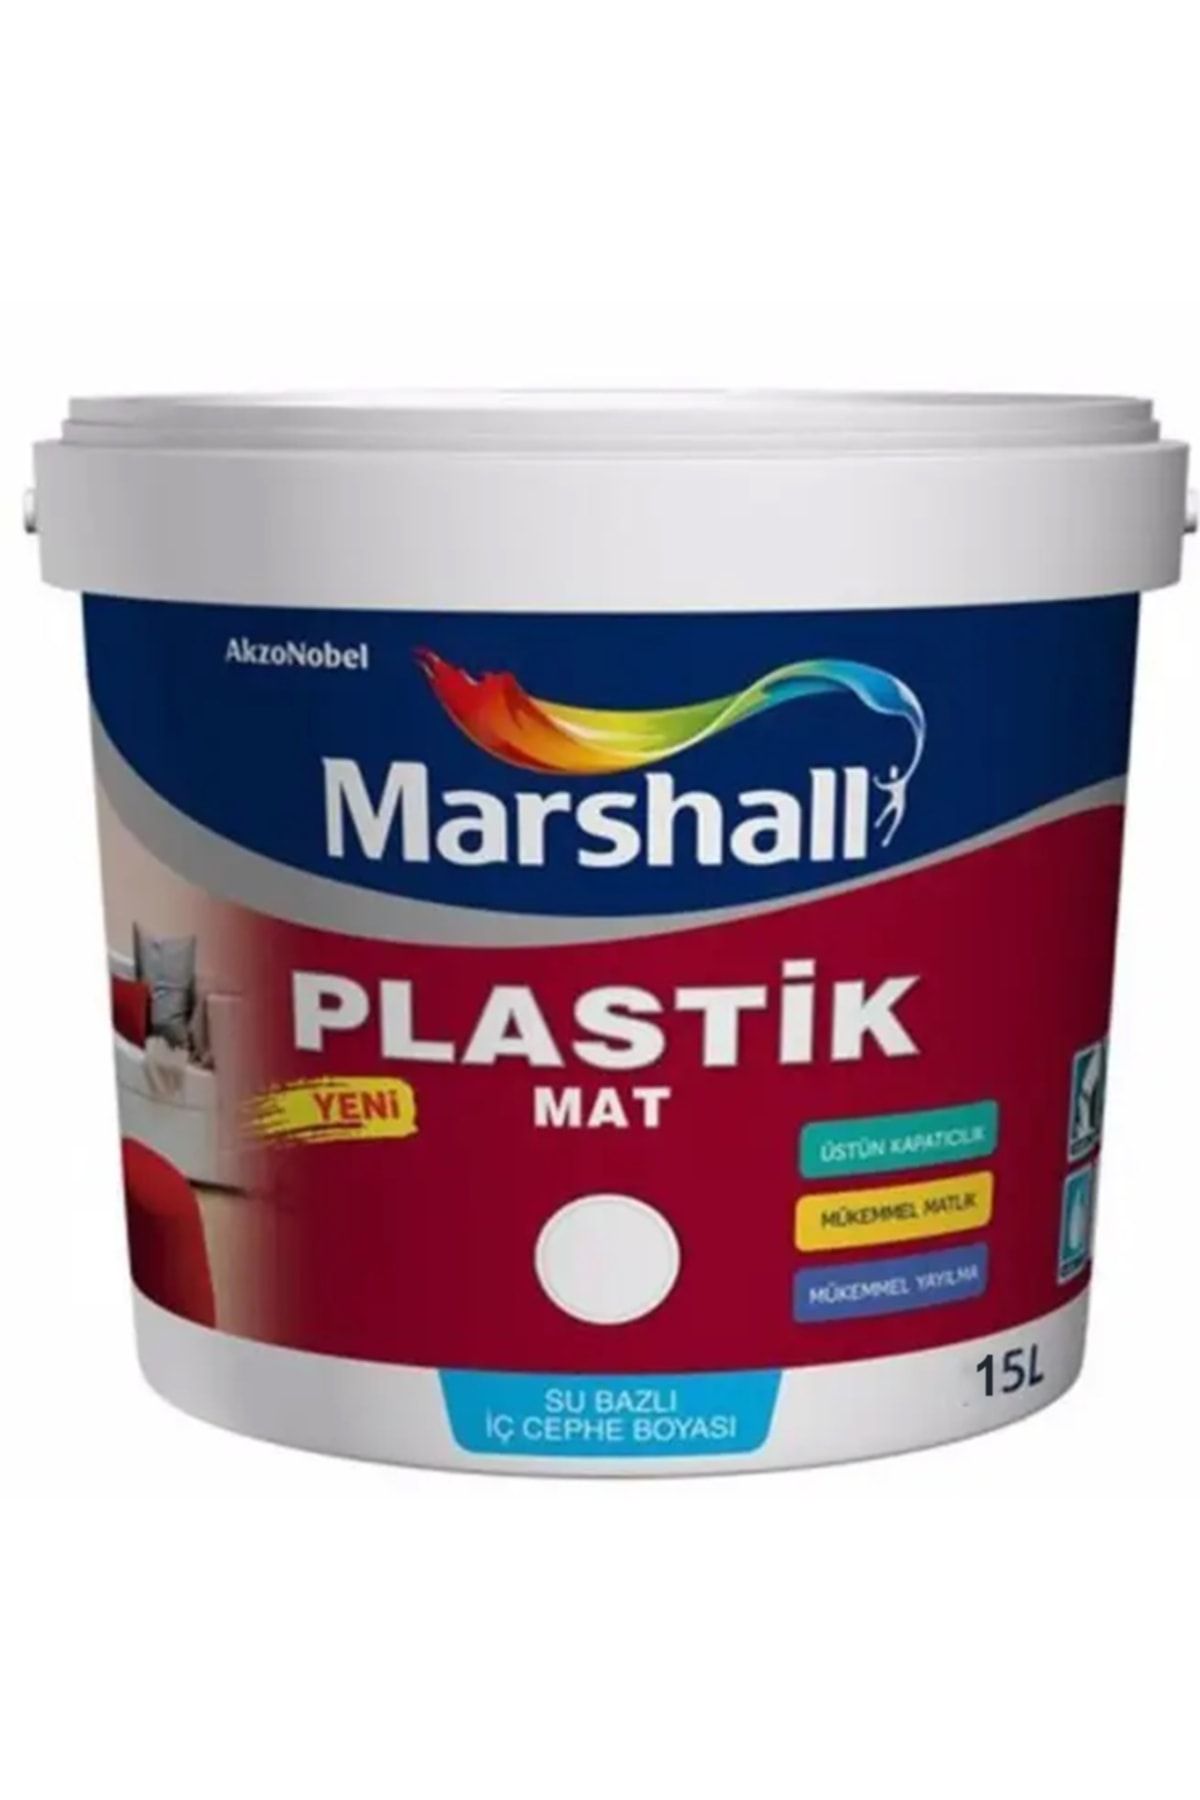 Marshall Plastik Mat Silinebilir Iç Cephe Boyası Serap 15 Lt (20 Kg)